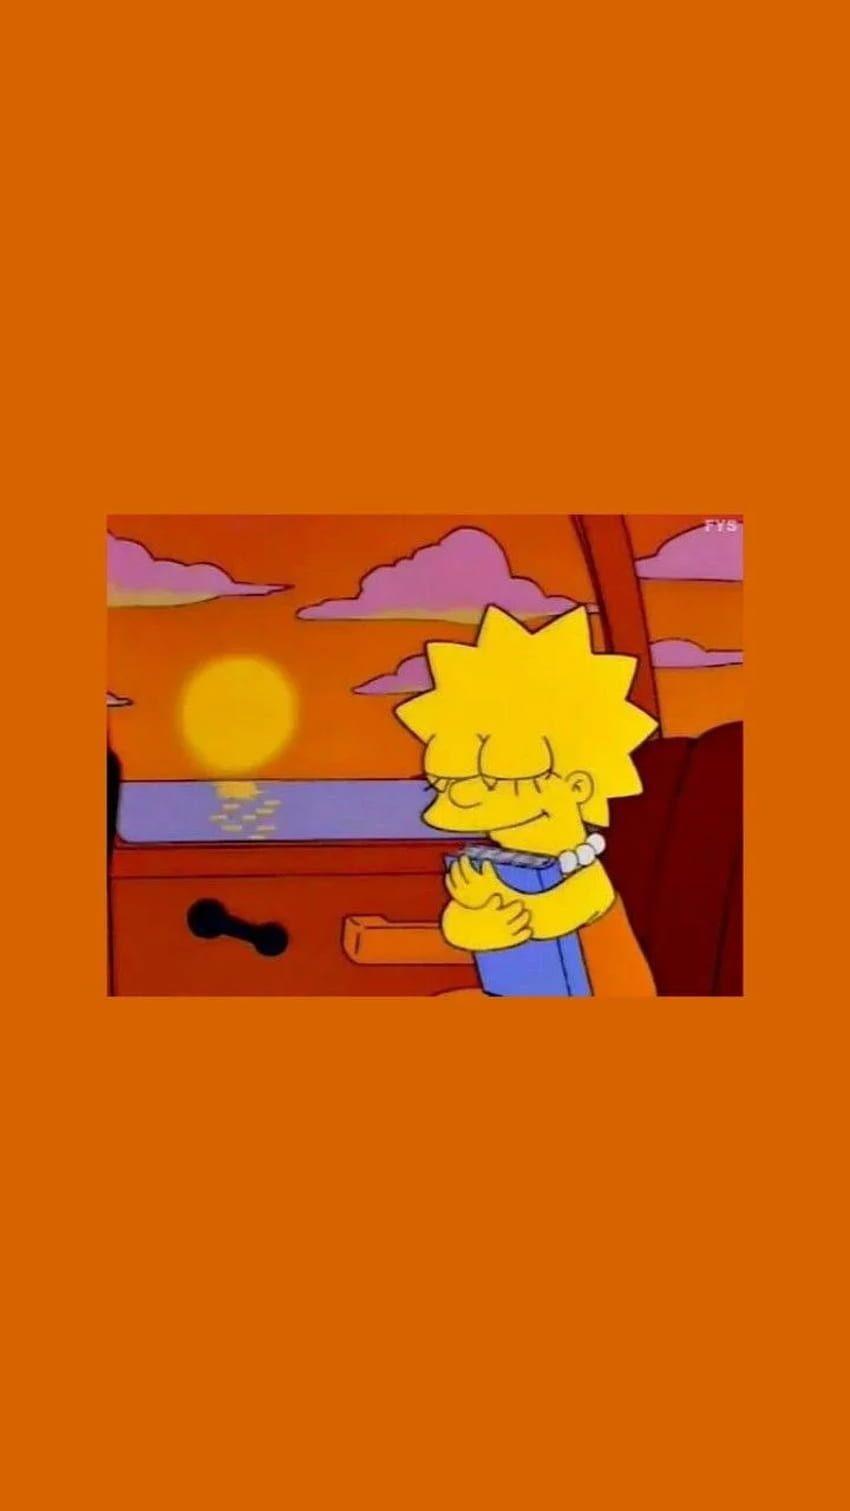 Lisa Simpson watching the sunset - Lisa Simpson, The Simpsons